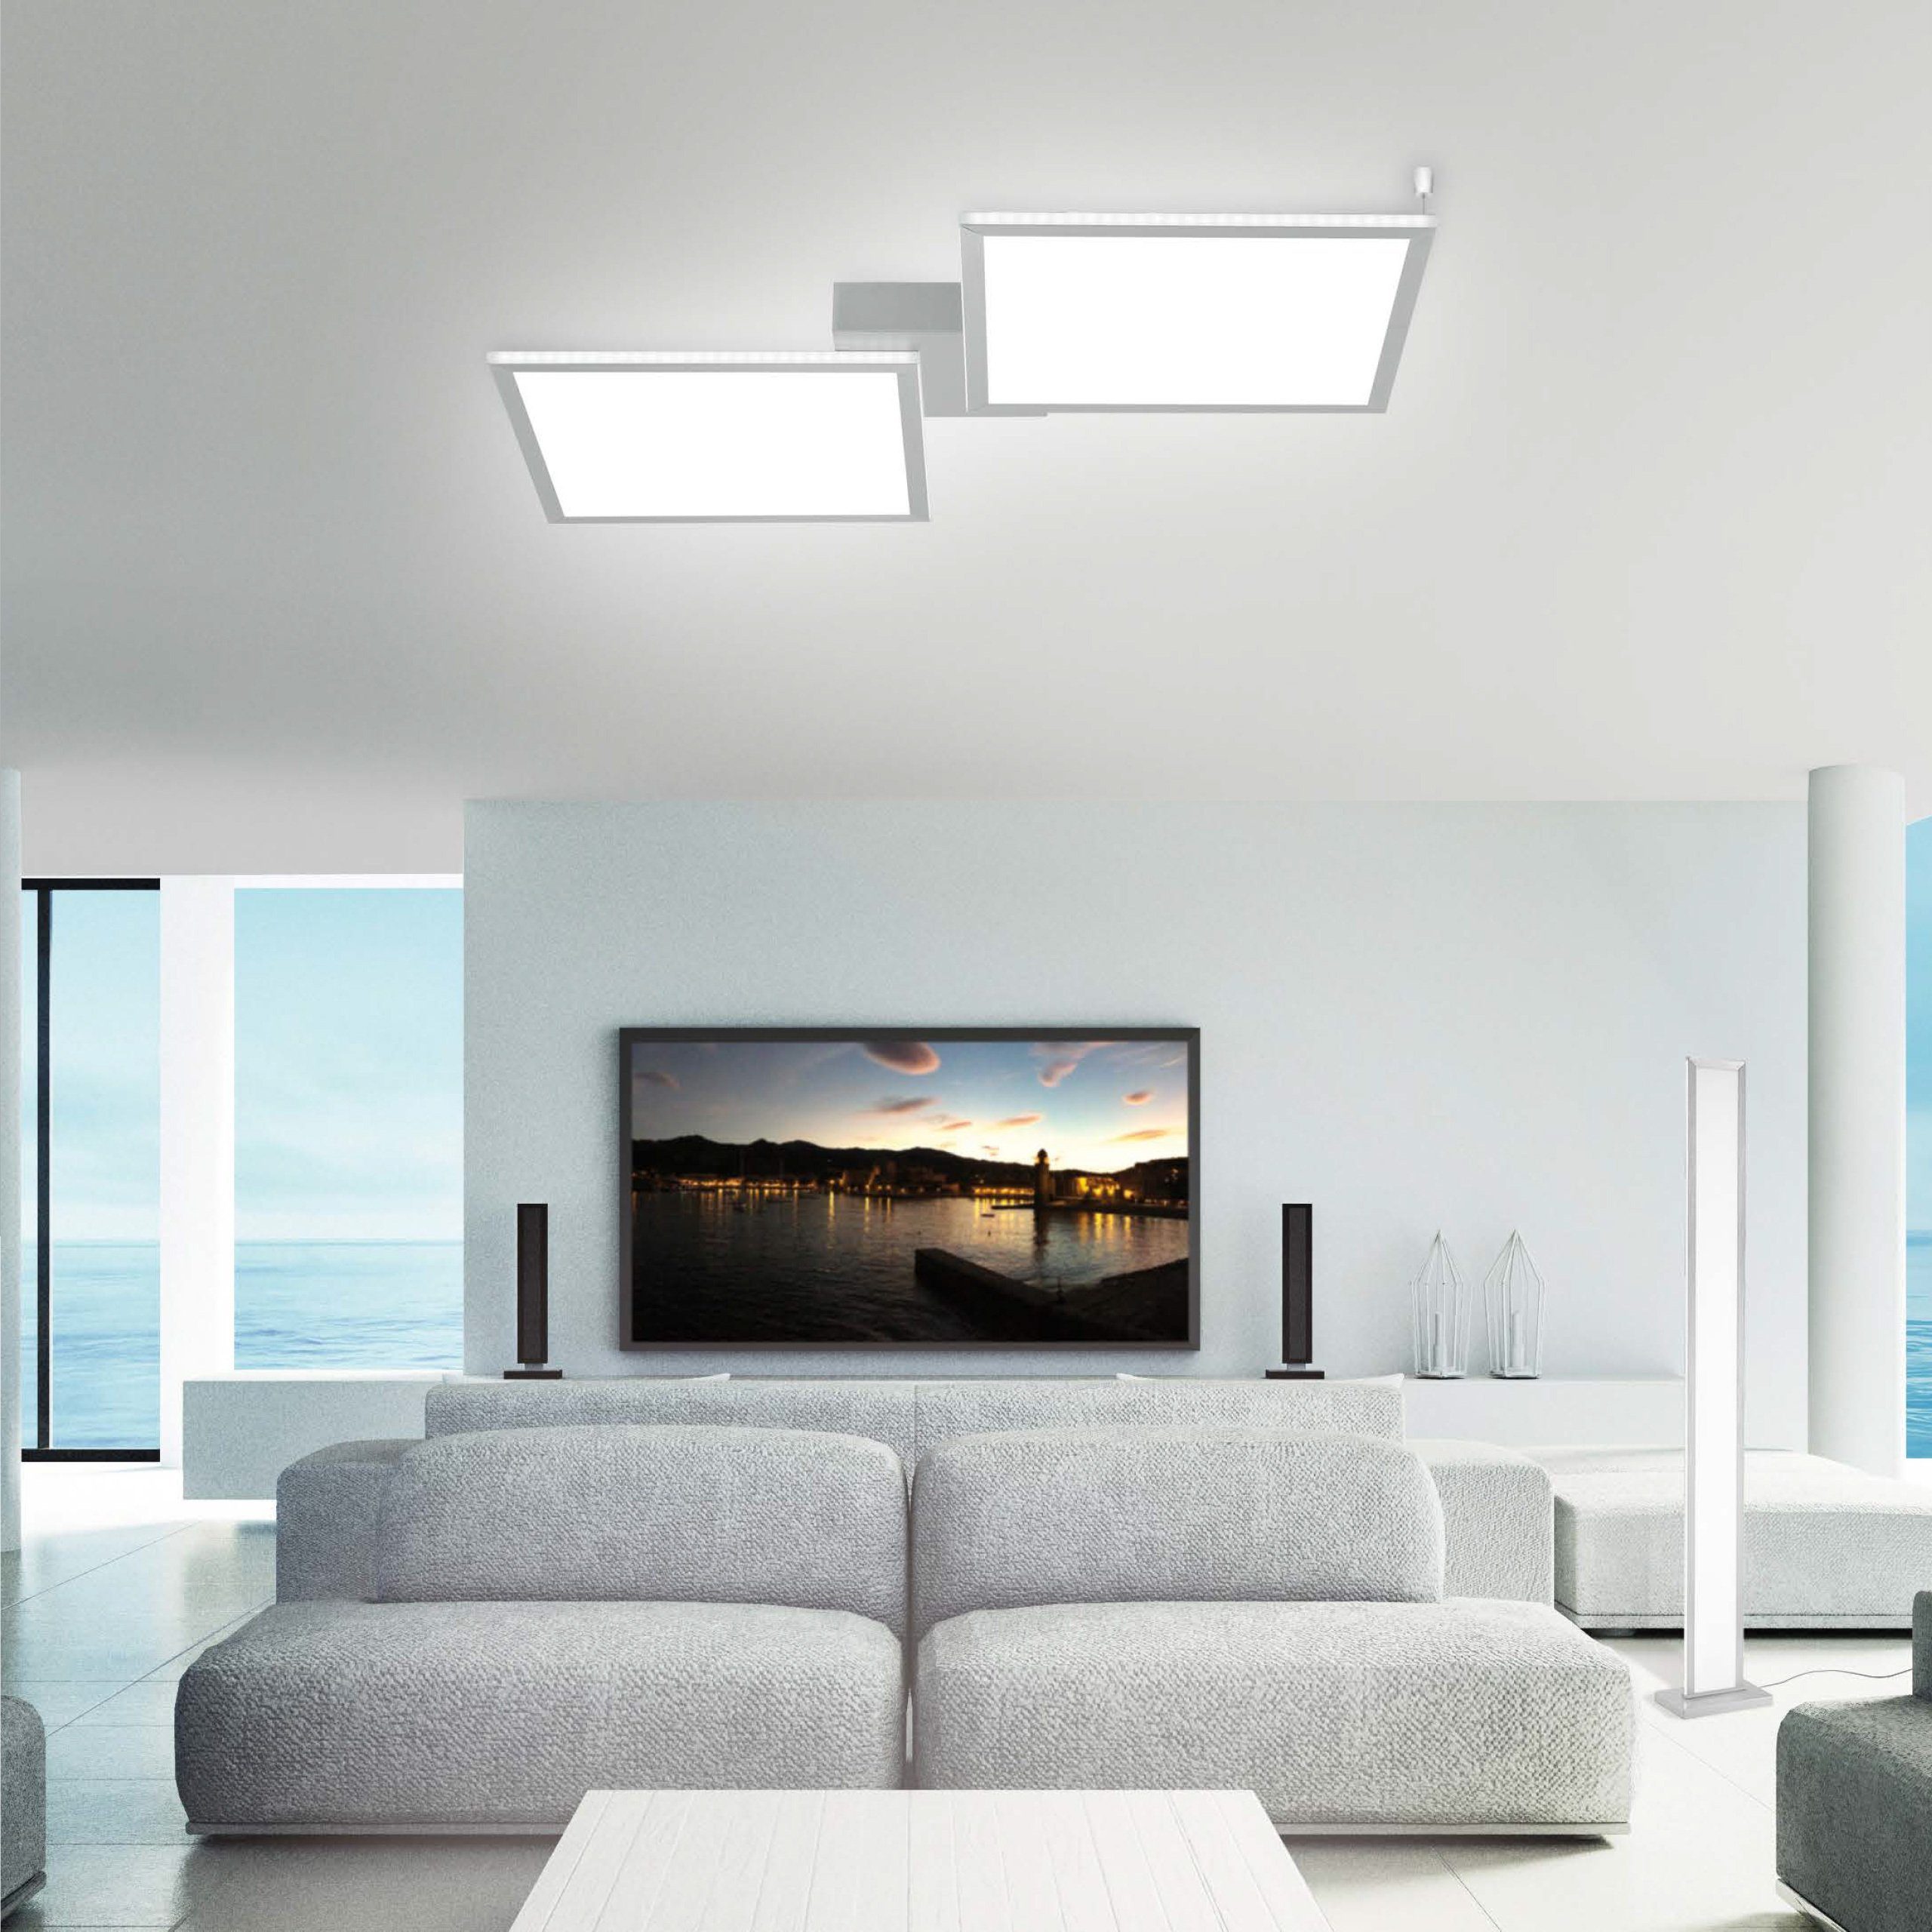 Paul Neuhaus Smarte LED-Leuchte Leuchtmittel, CCT-Farbtemperaturregelung, Memoryfunktion, Q Smart mit - Home, Fernbedienung Dimmfunktion, CCT-Farbtemperaturregelung, Home, dimmbar Deckenleuchte Smart LED ROSA